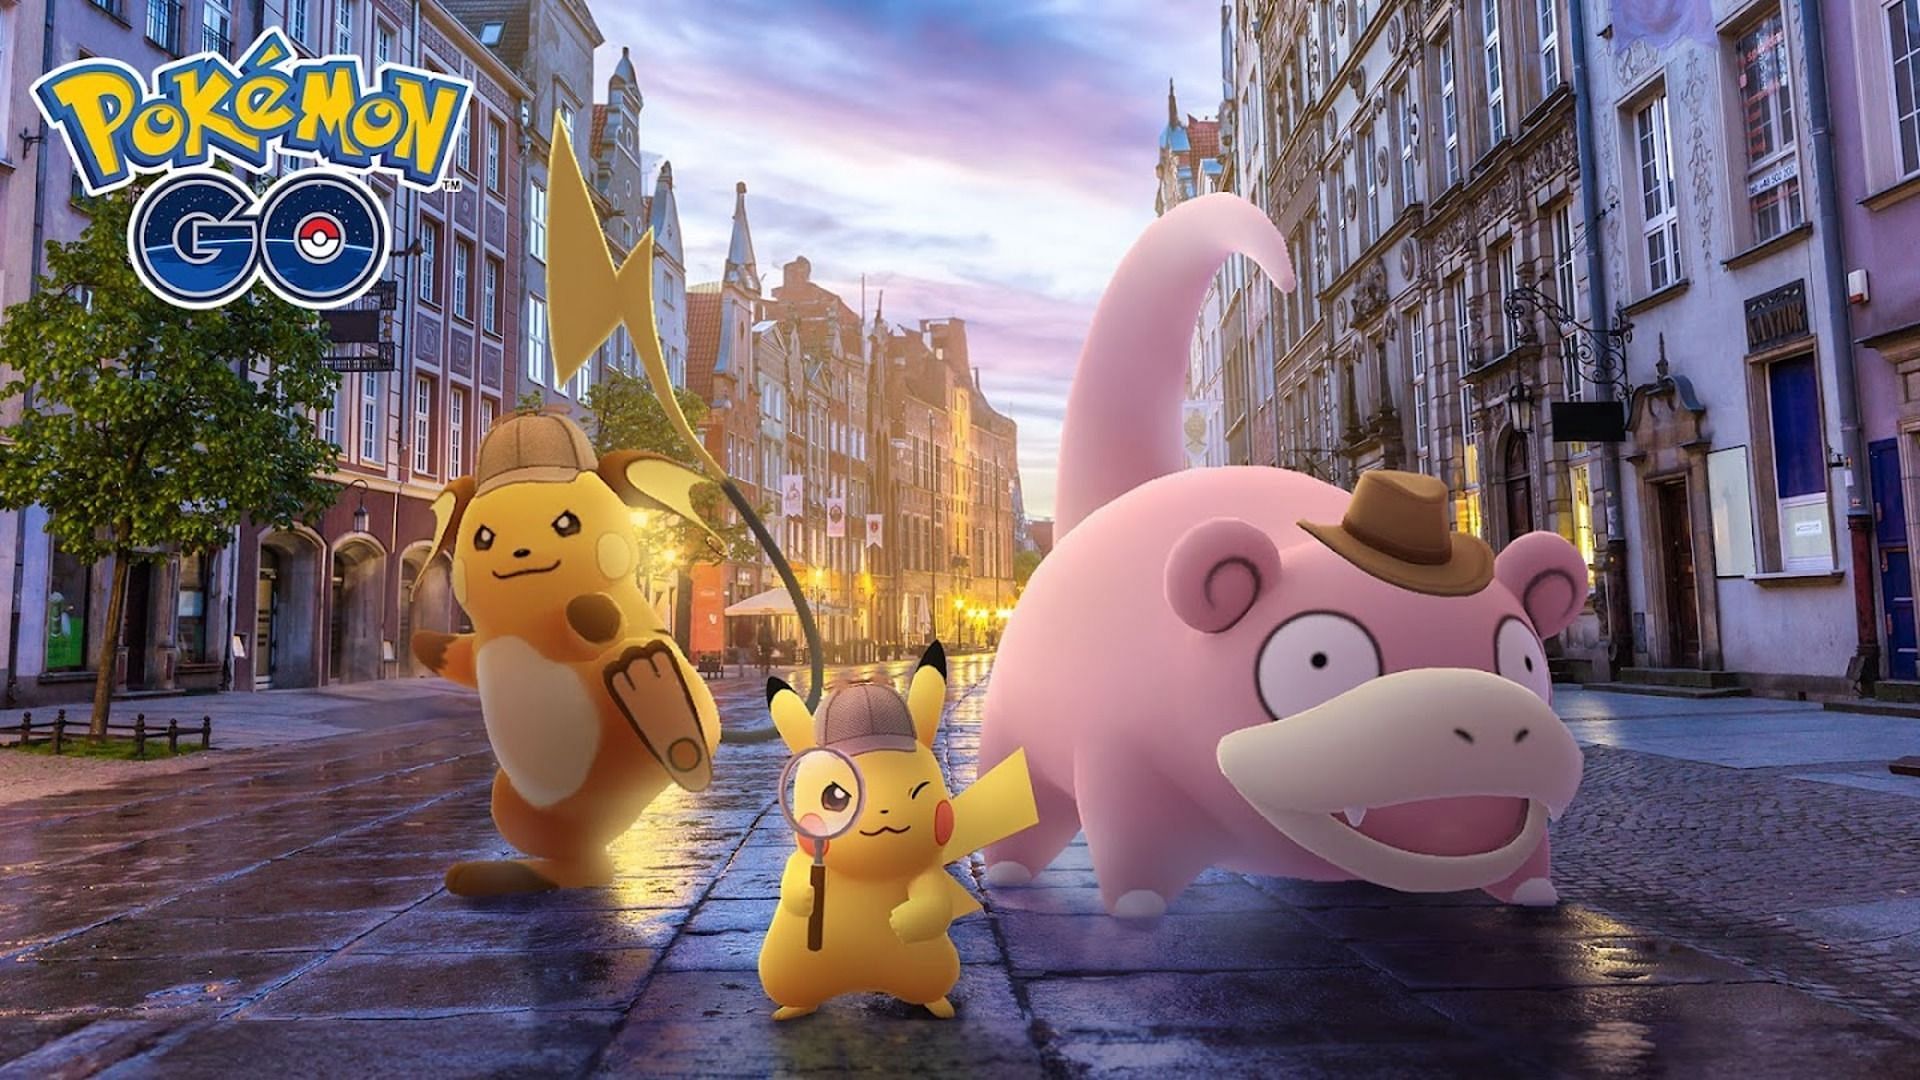 Official artwork for the Detective Pikachu event for Pokemon GO (Image via Niantic)